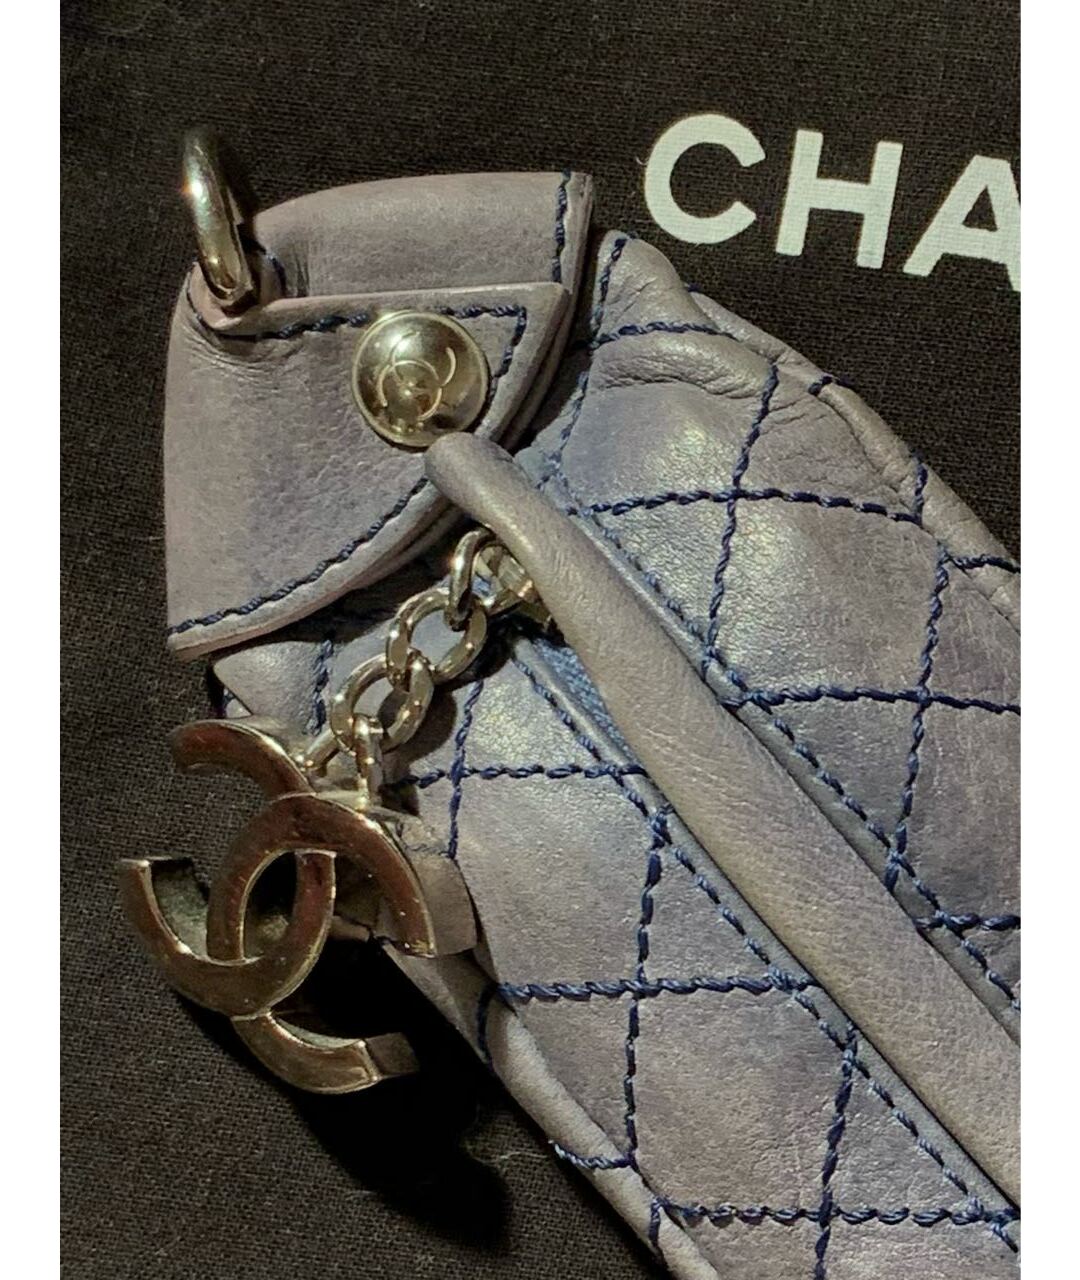 CHANEL PRE-OWNED Голубой кожаный кошелек, фото 2